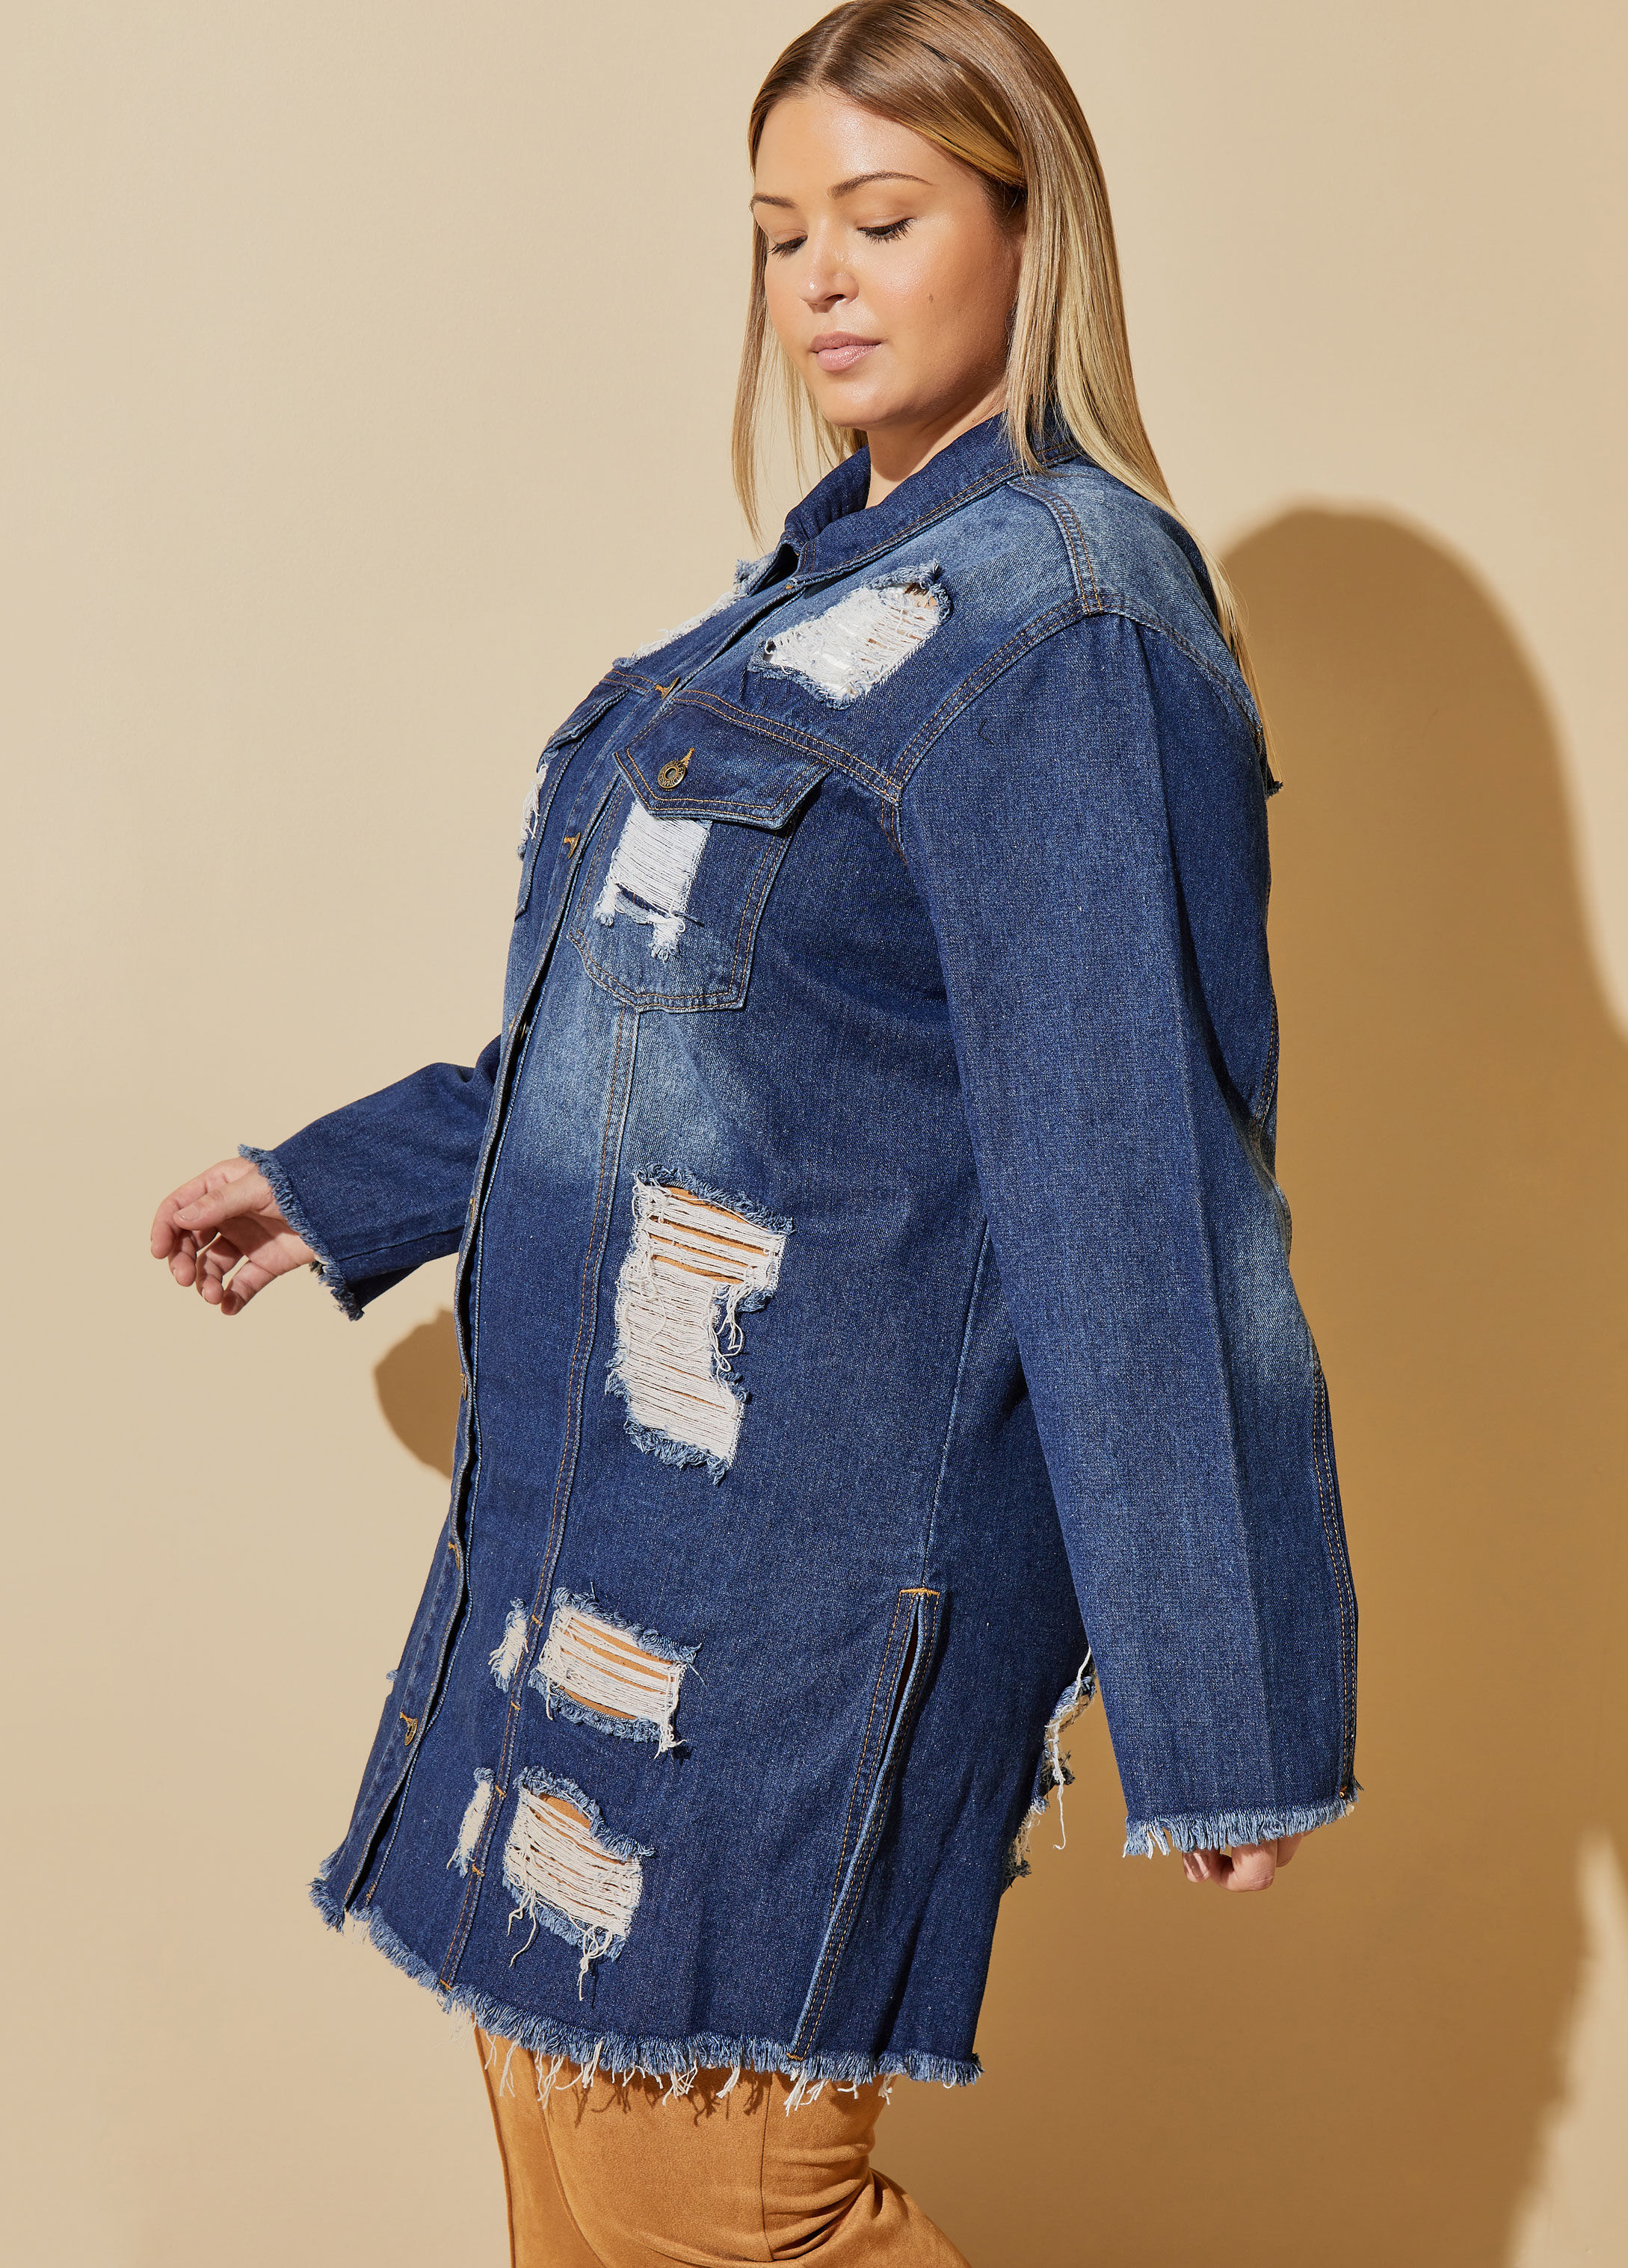 Rosfancy Womens Distressed Ripped Denim Jean Jacket Button Down Oversized  Jackets Coat, S-XXL - Walmart.com